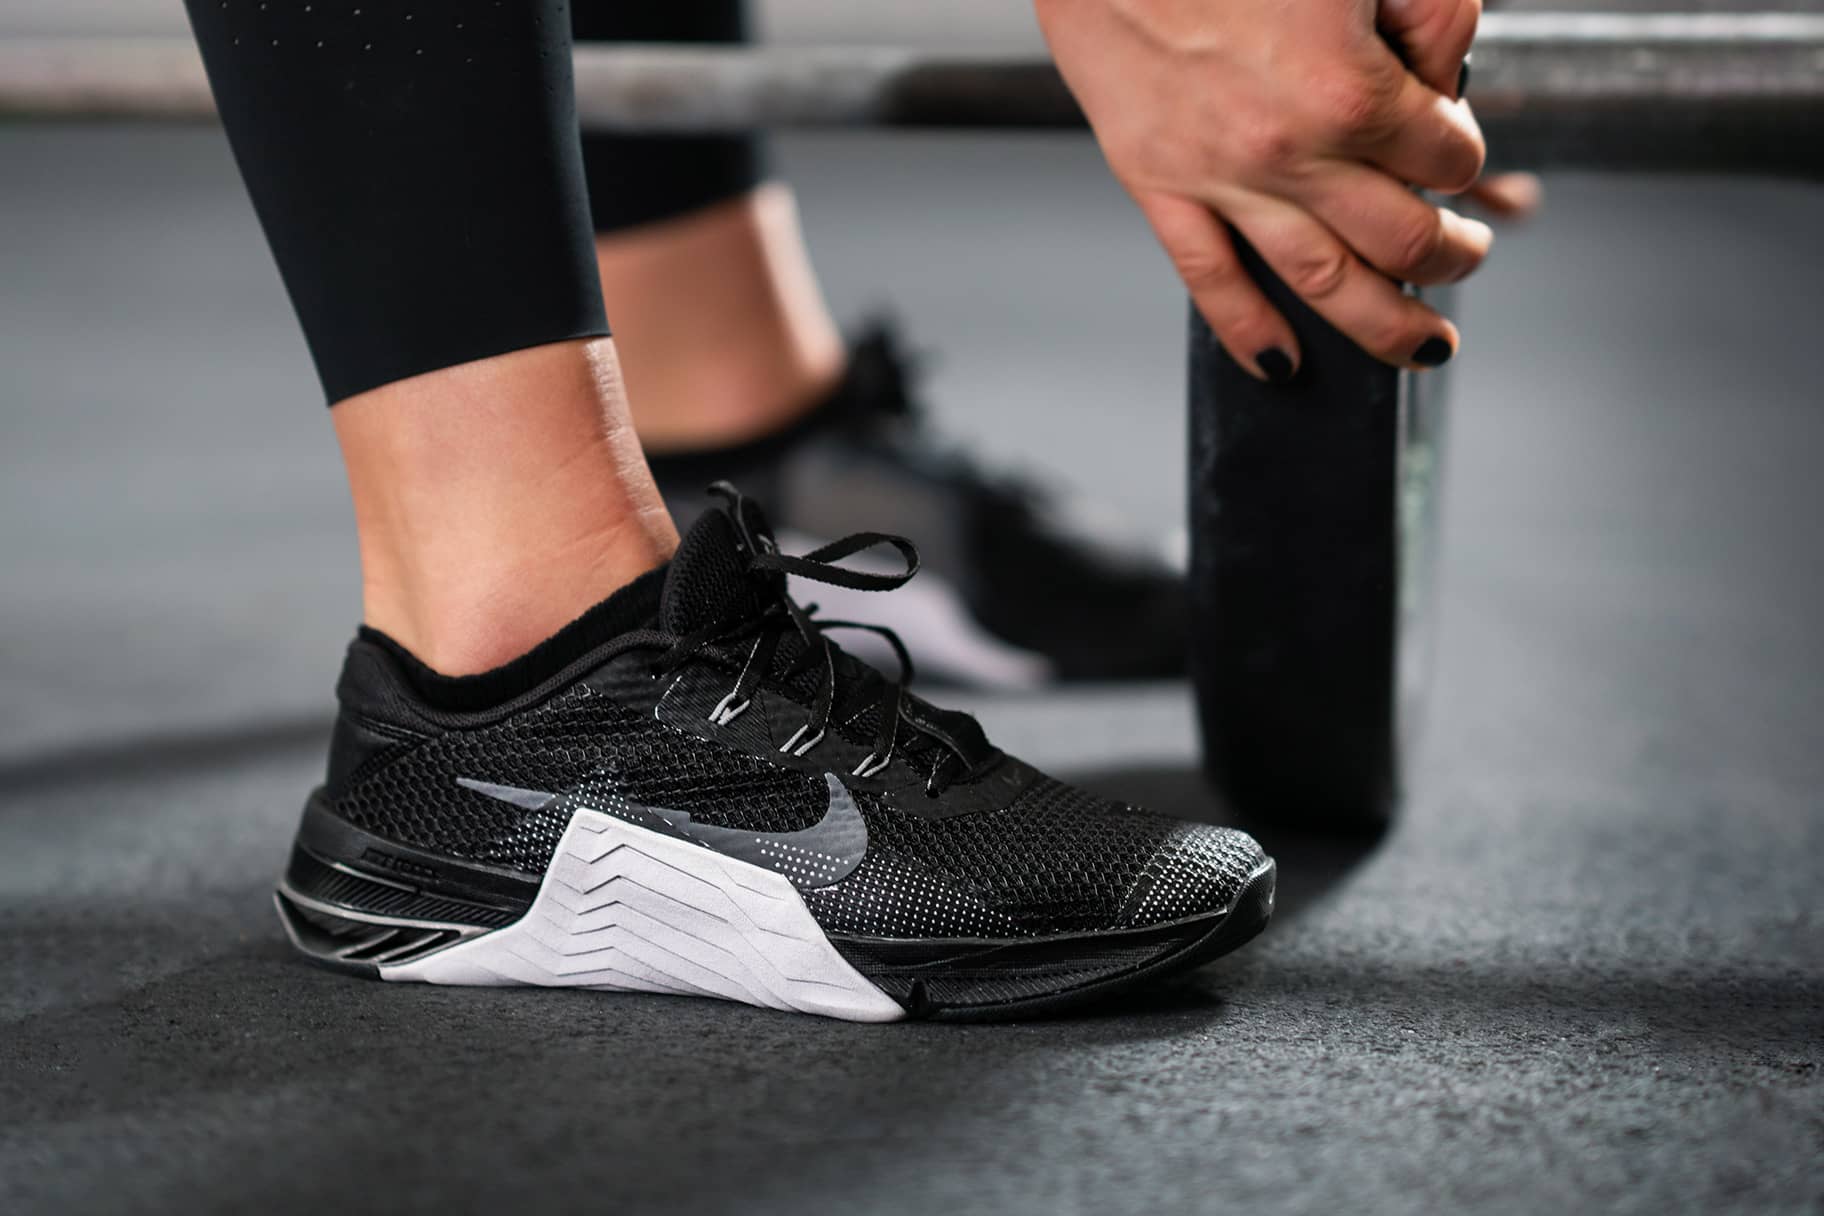 nike aerobic shoes | Women's Gym & Training Shoes. Nike.com